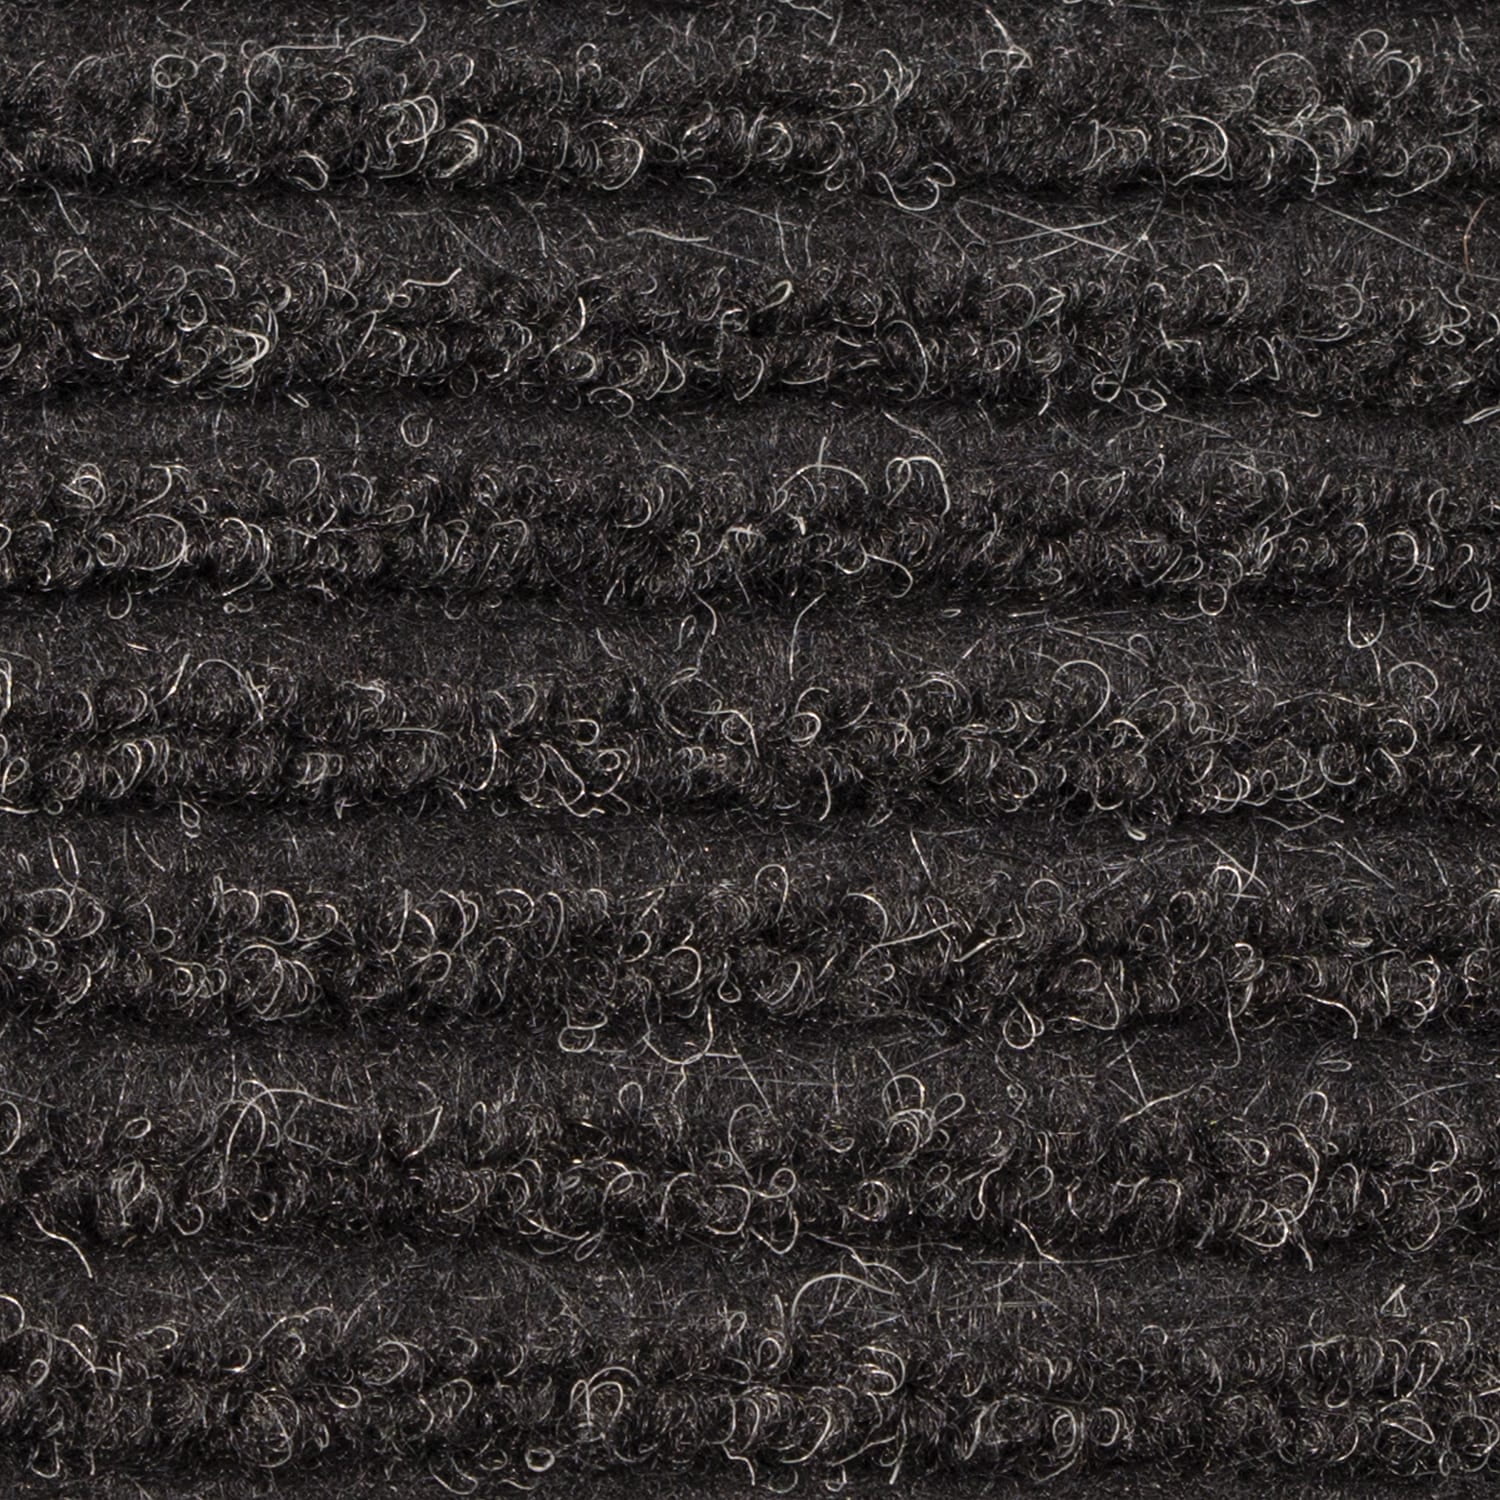 Apache Mills, Inc. Rib carpet runner 36-in W Cut-to-Length Black